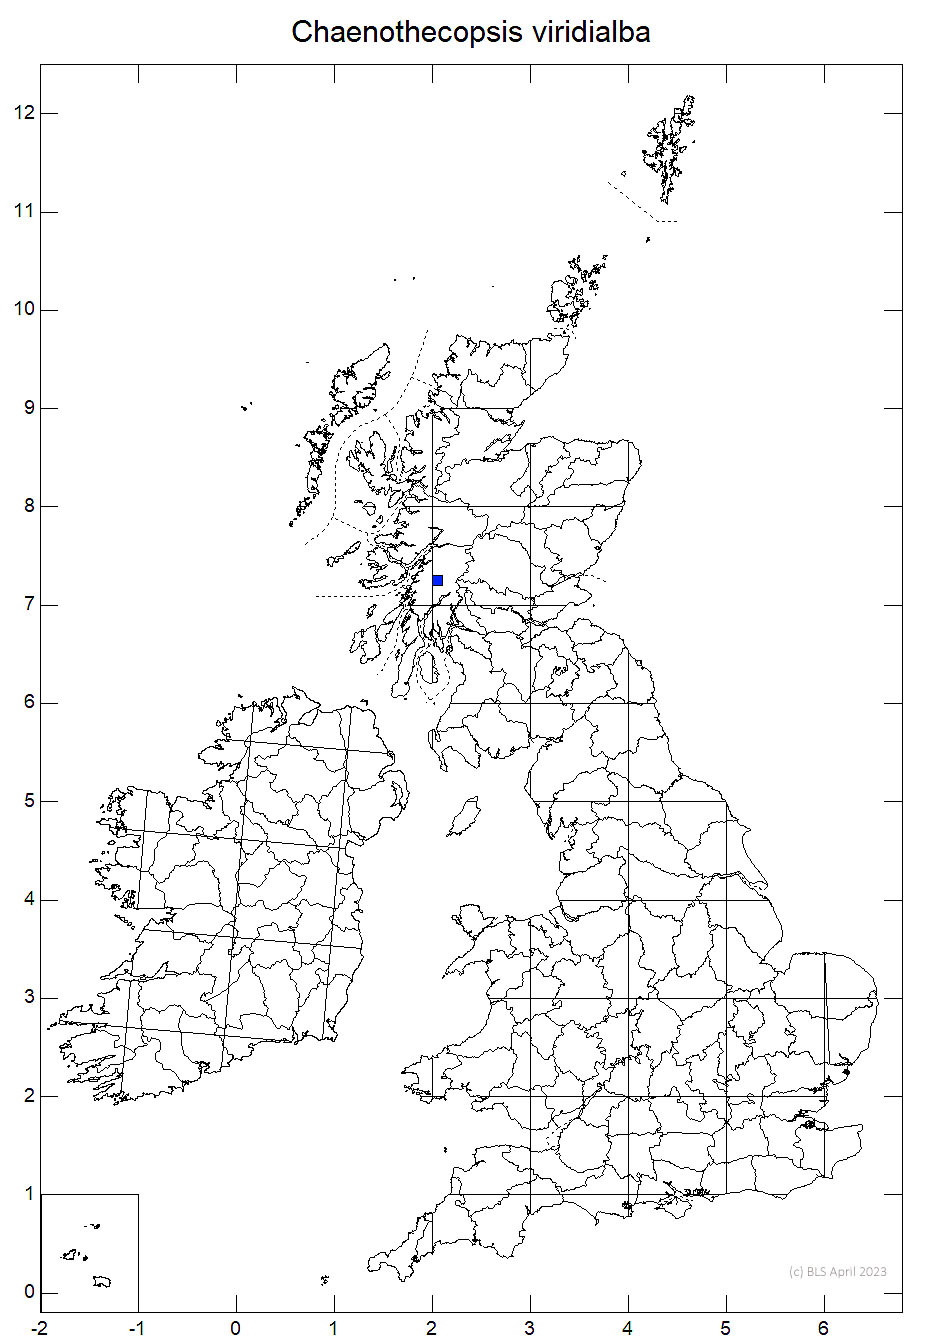 Chaenothecopsis viridialba 10km sq distribution map